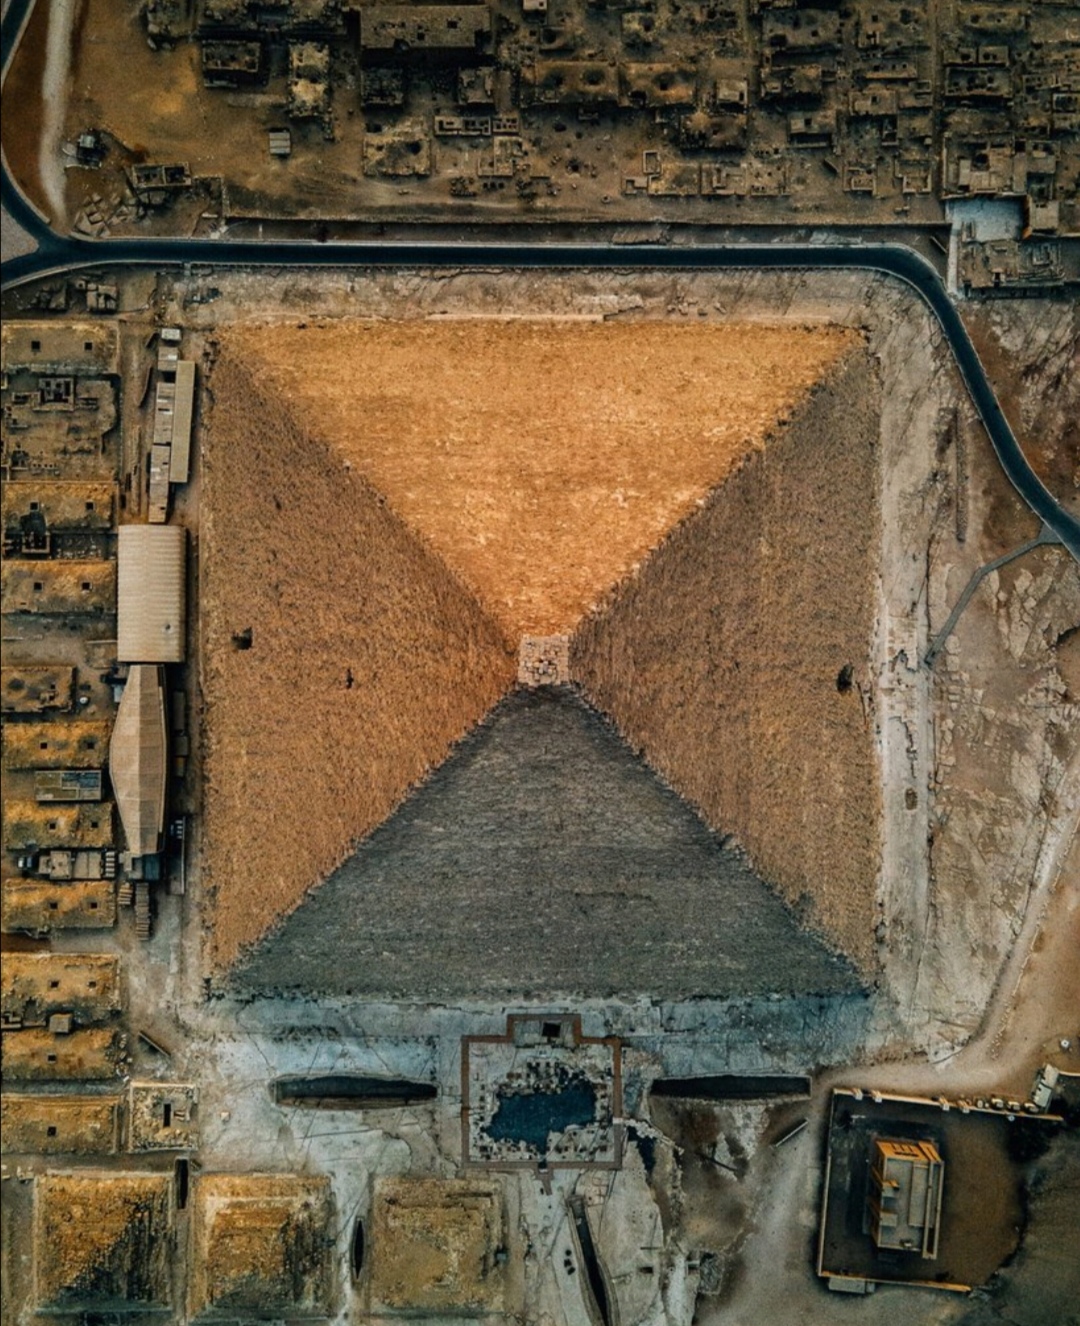 Pyramids Heliport